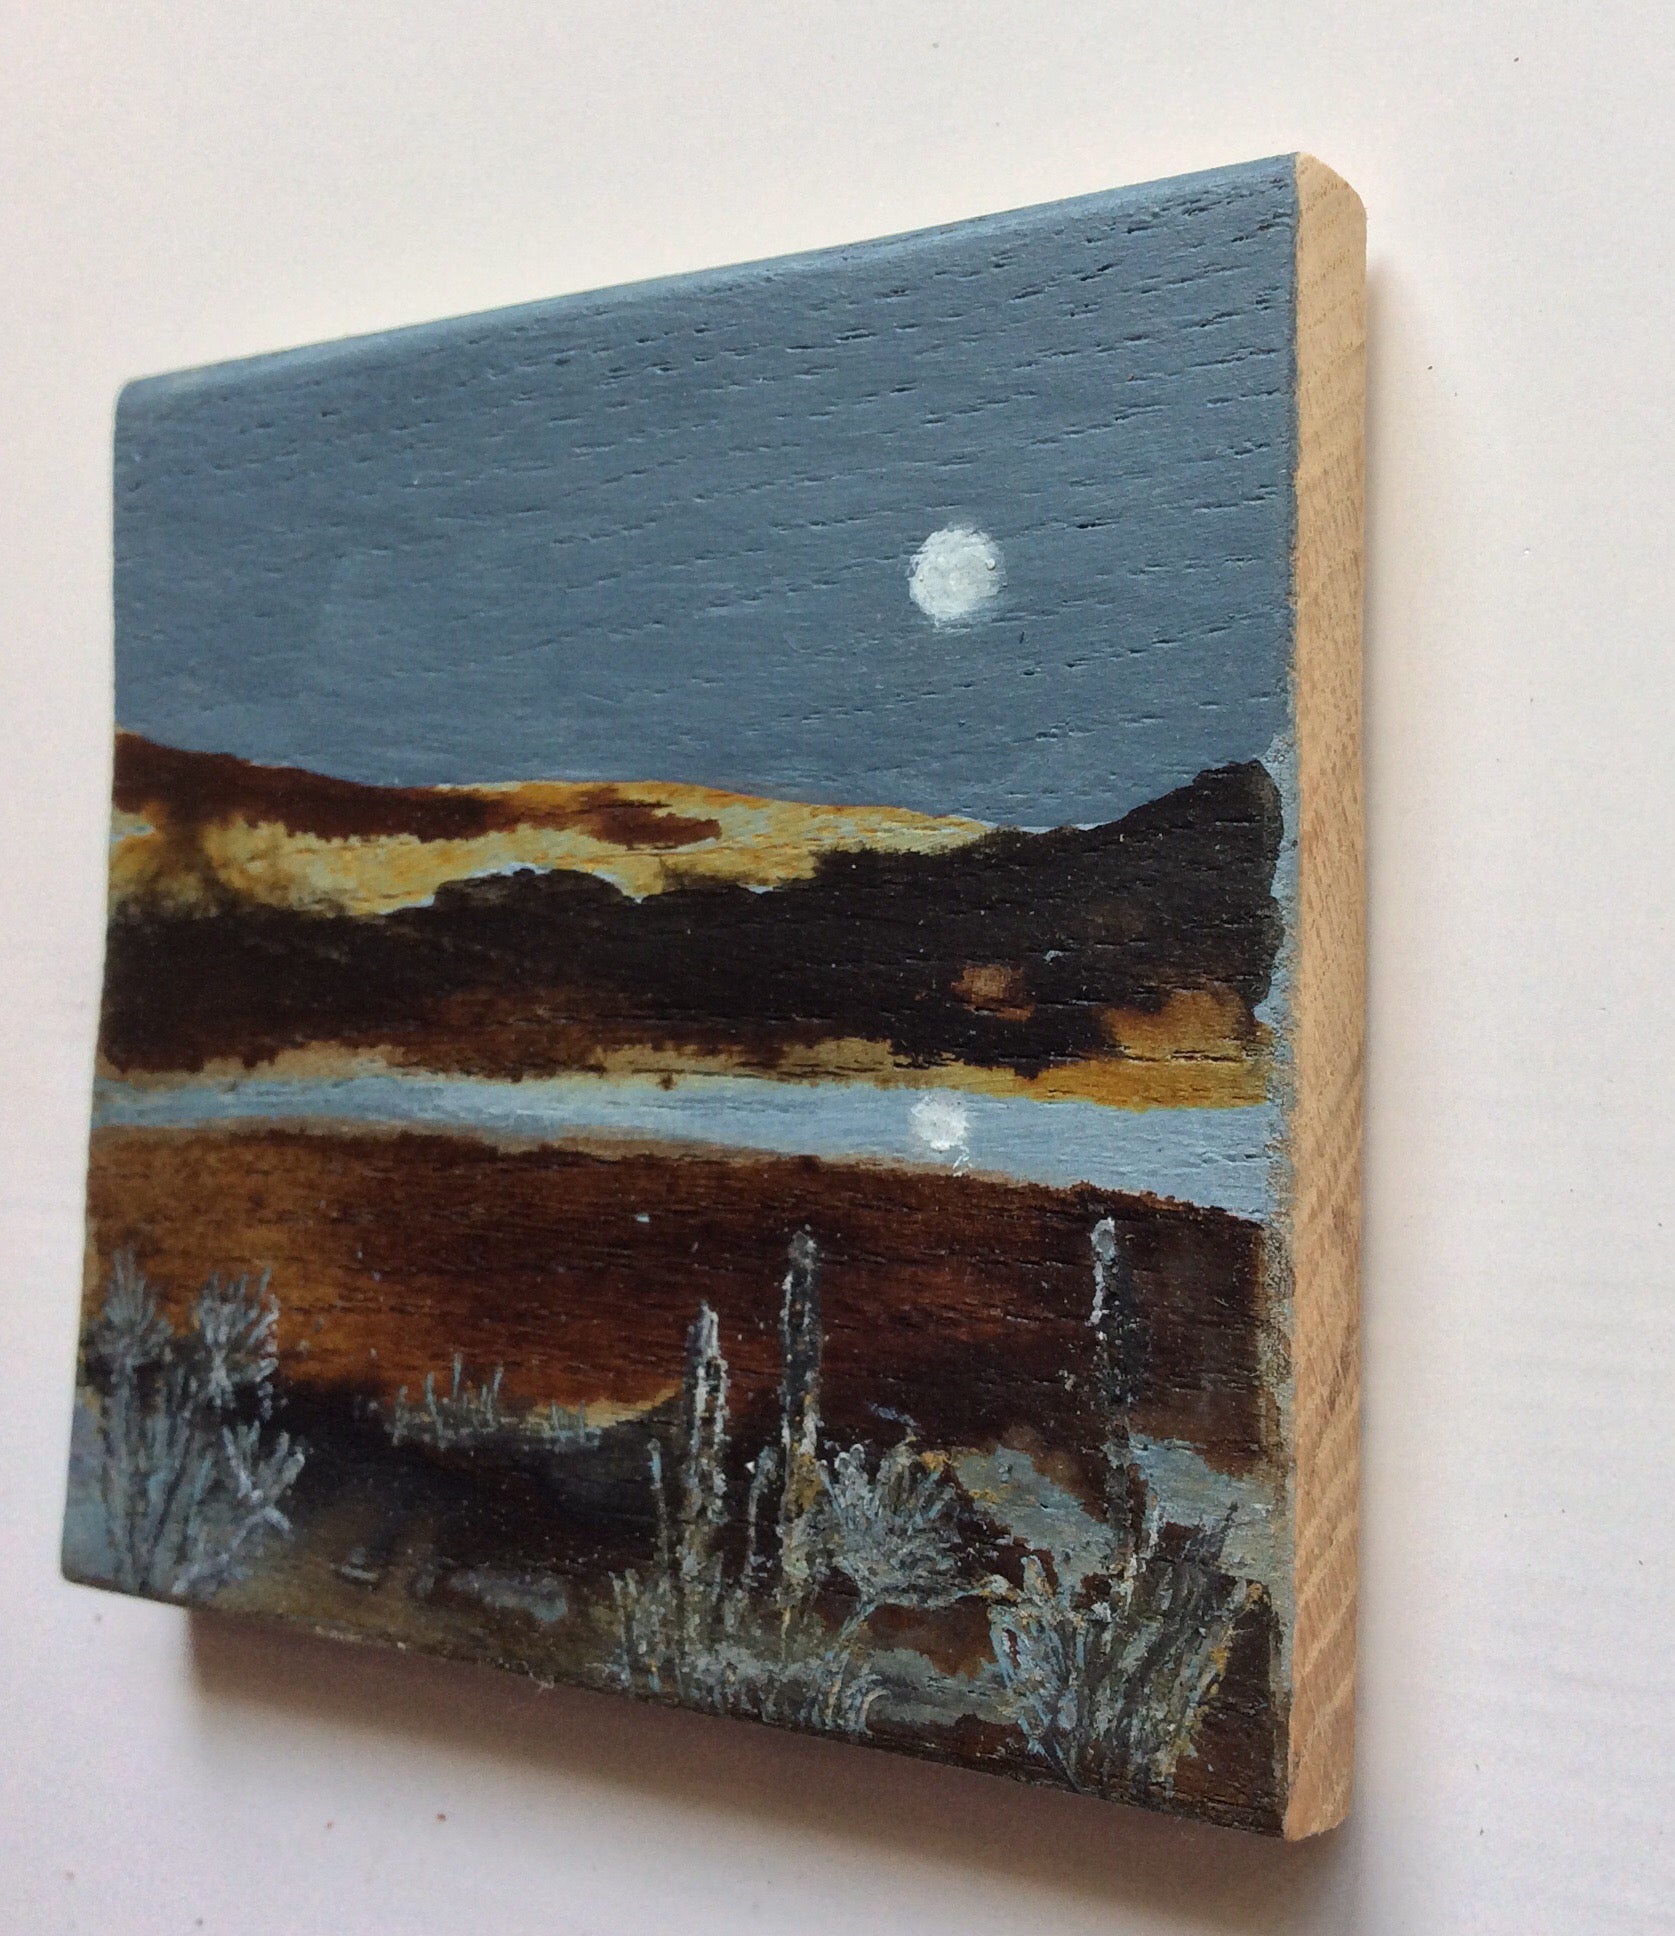 Mini Mixed Media Art on wood By Louise O'Hara - "Riverside Reflections”